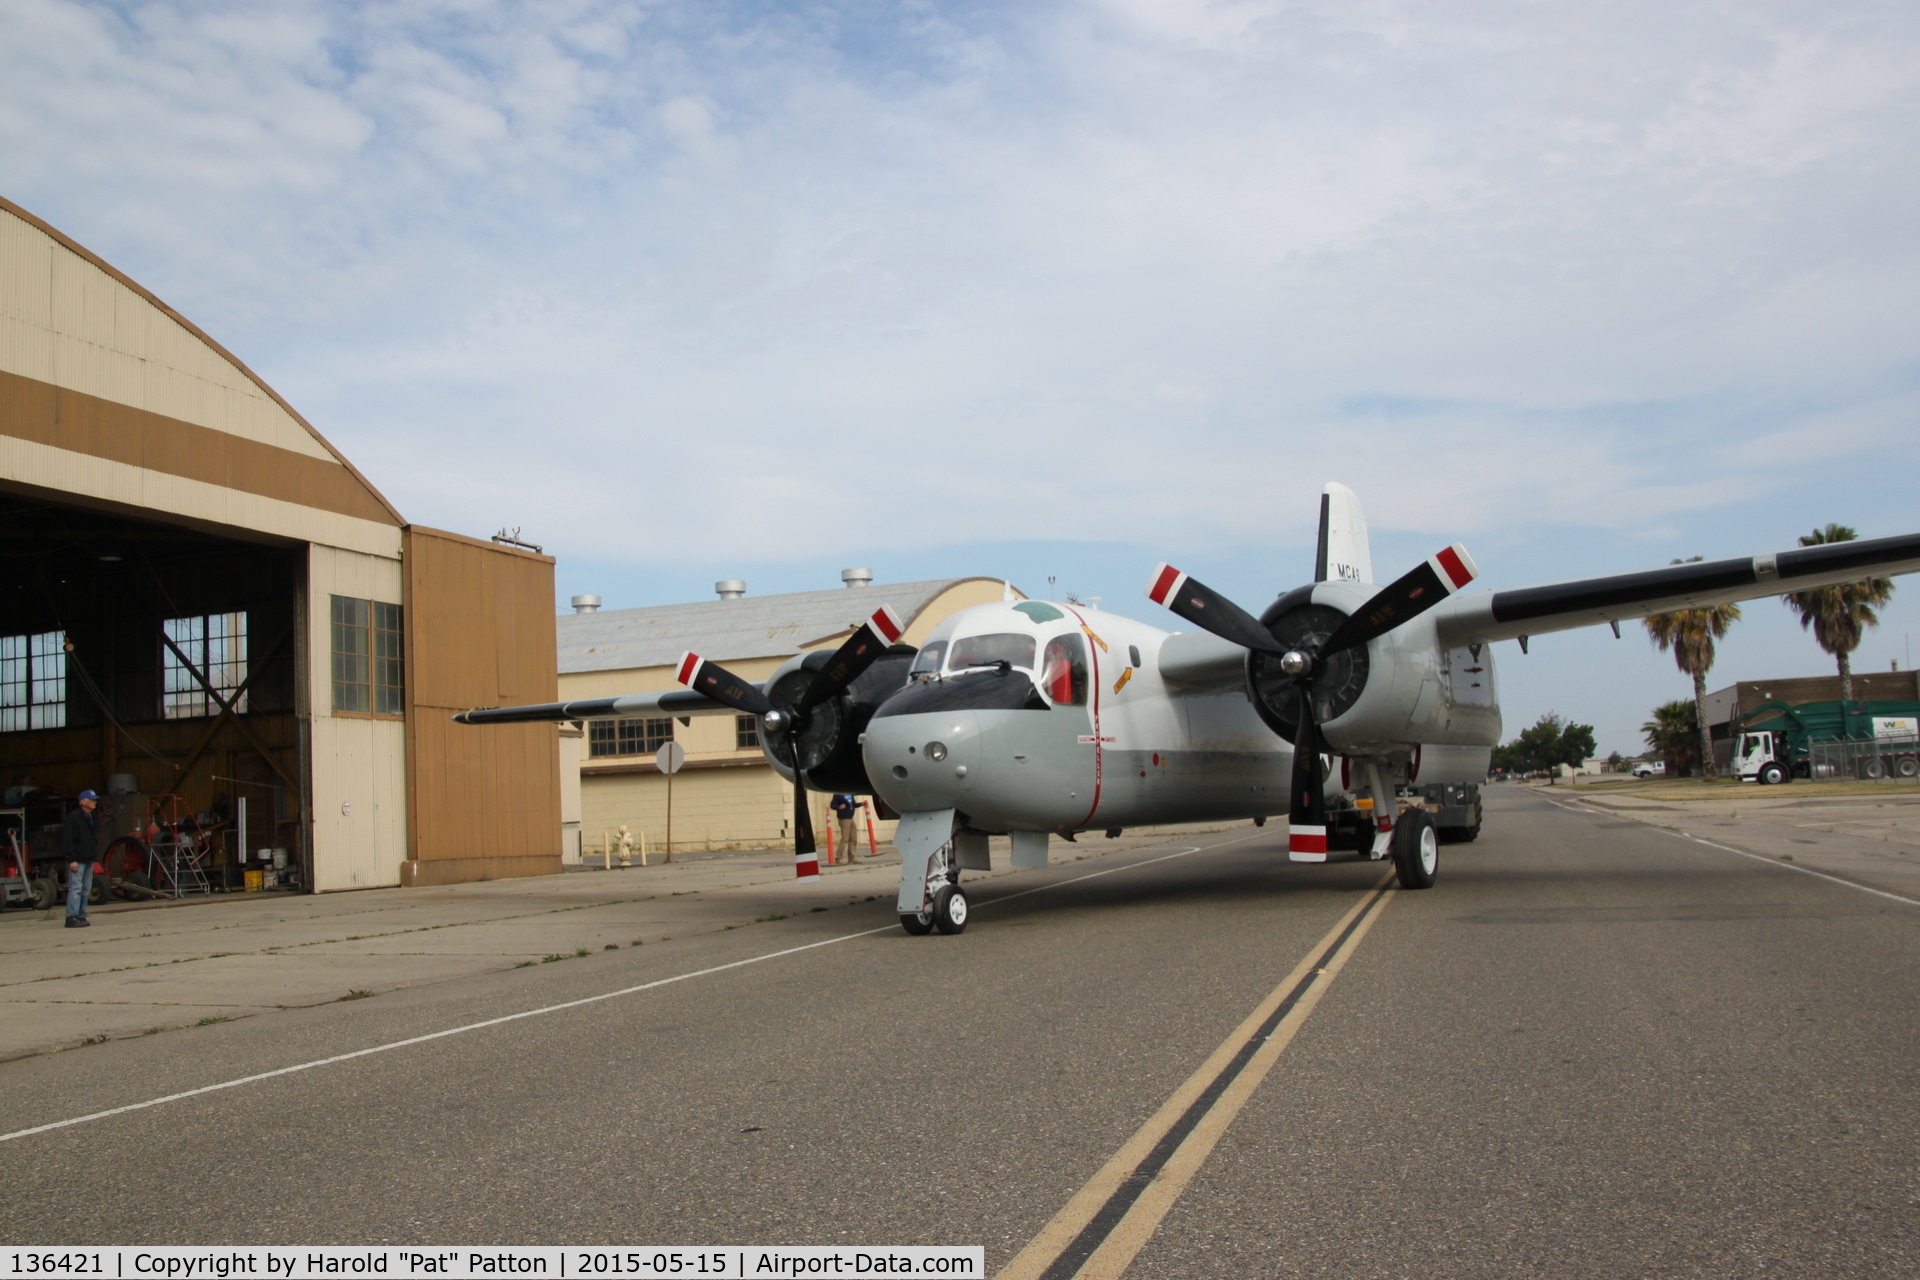 136421, Grumman S2F-1 Tracker C/N 330, Restoration rollout from CASTLE AIR MUSEUM's restoration hangar.